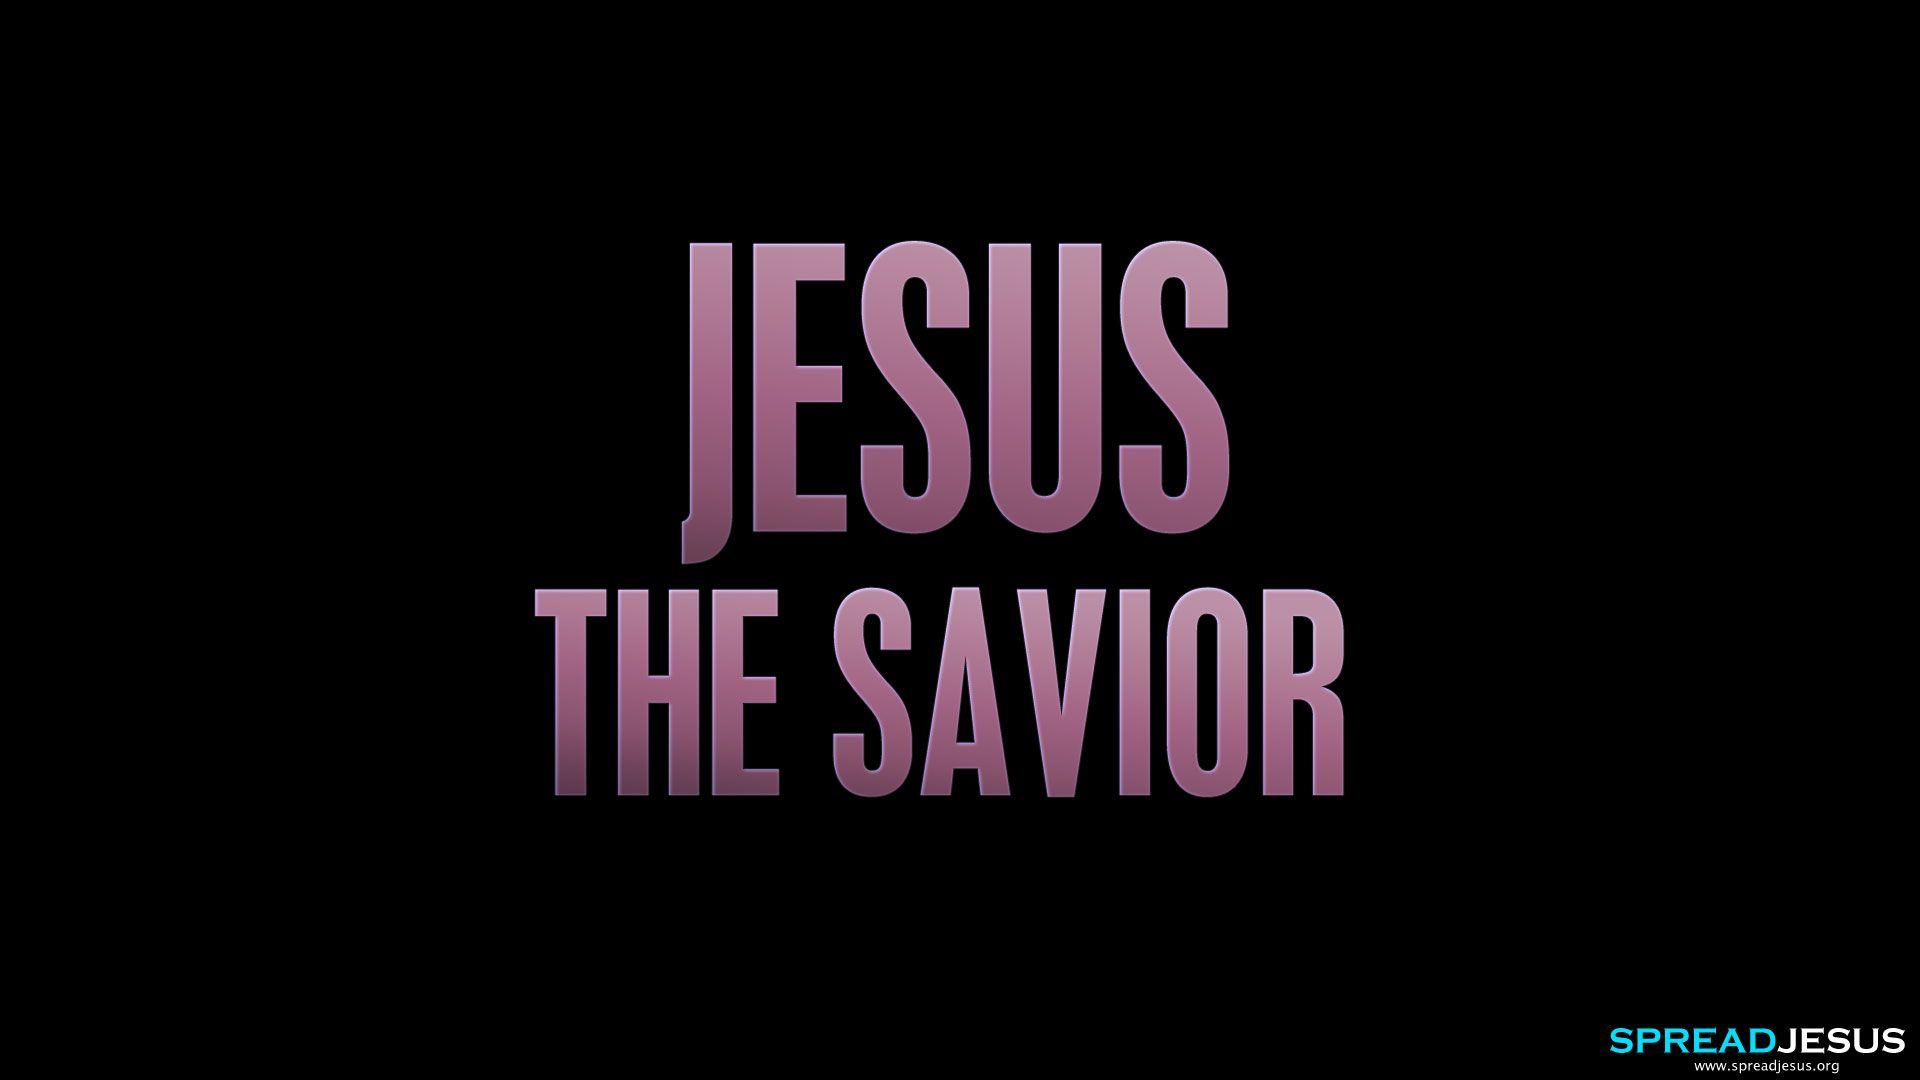 Jesus Christ HD wallpaper free download Jesus The Savior:Jesus